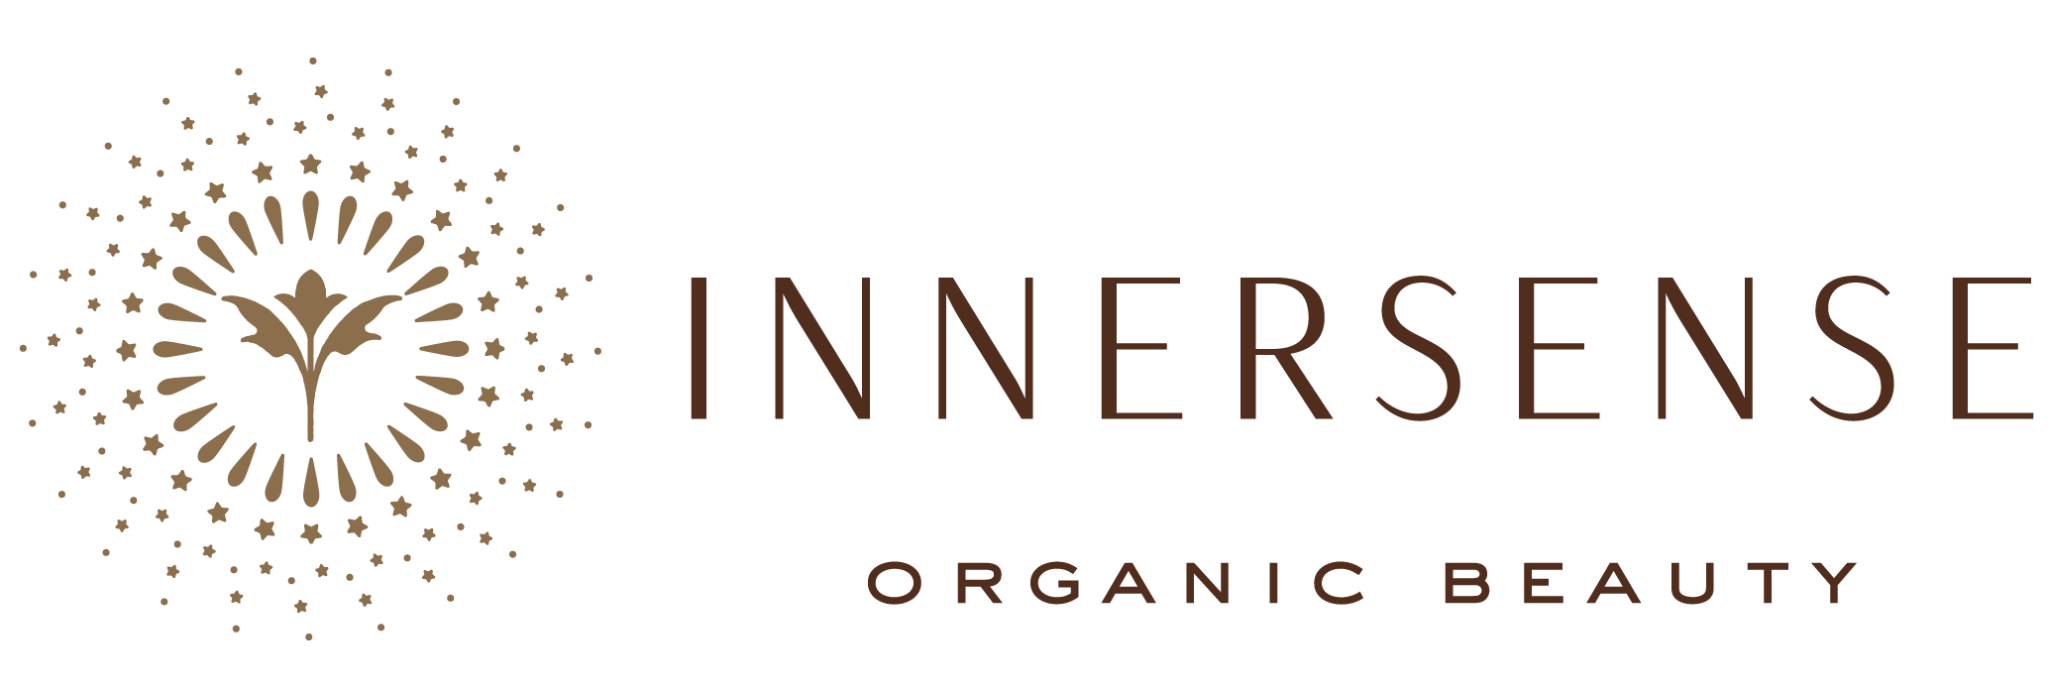 Innersense organic hair care logo